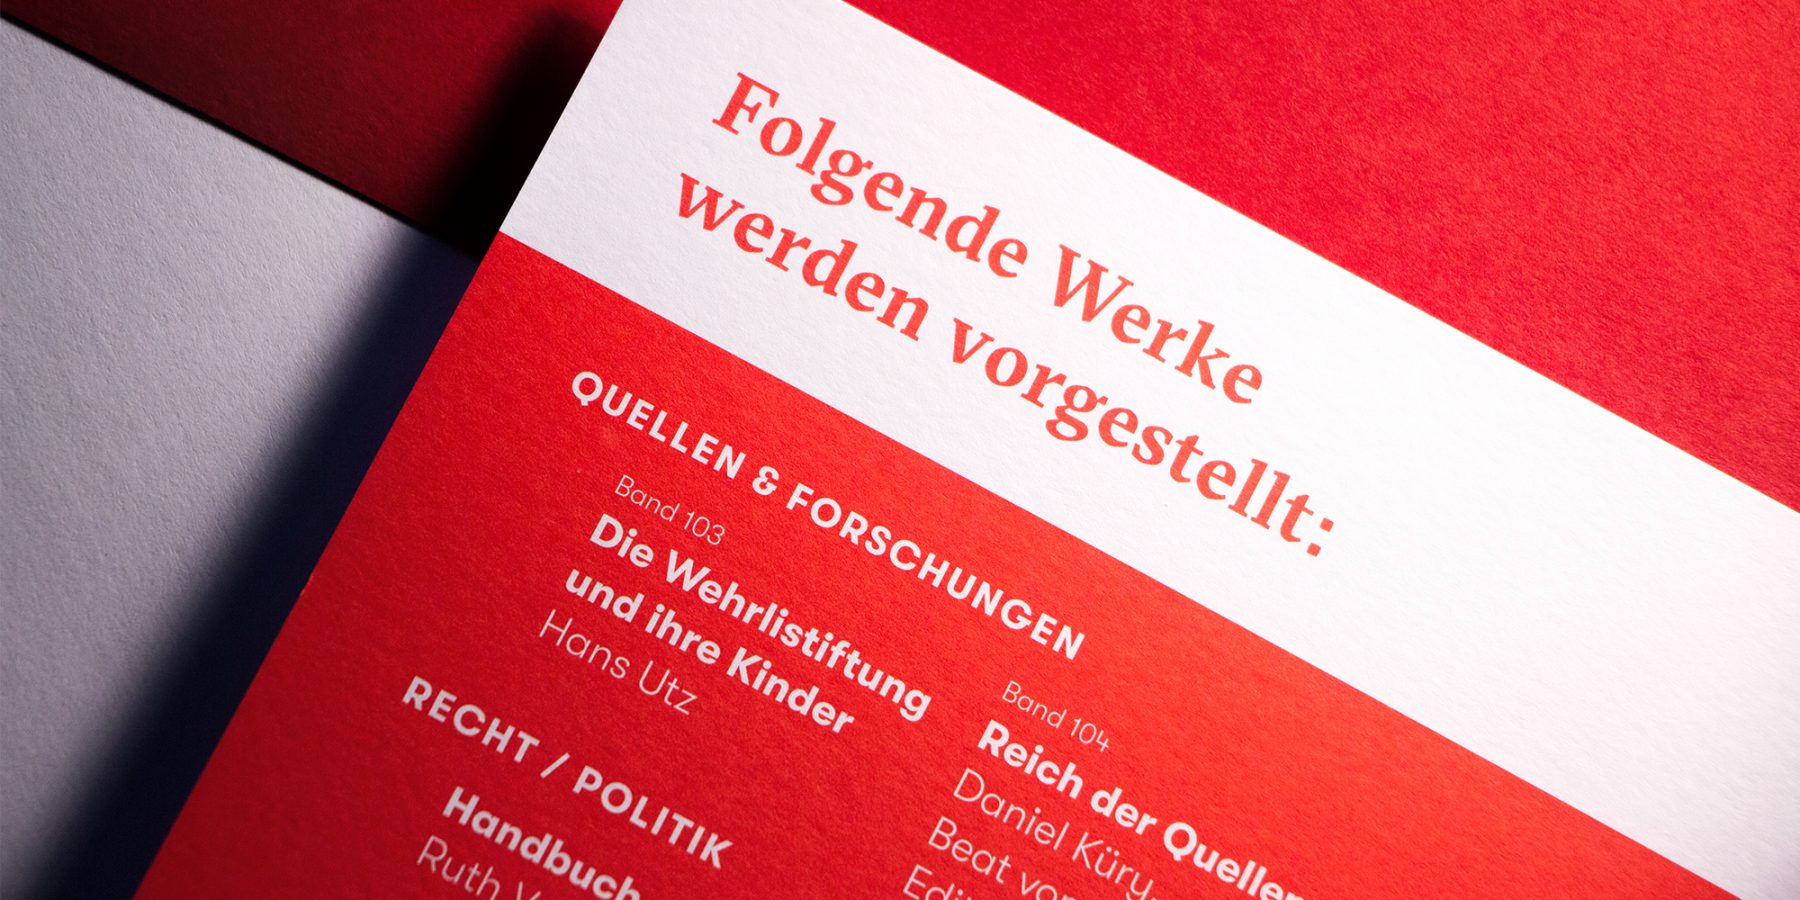 OHO Design, Verlag Baselland